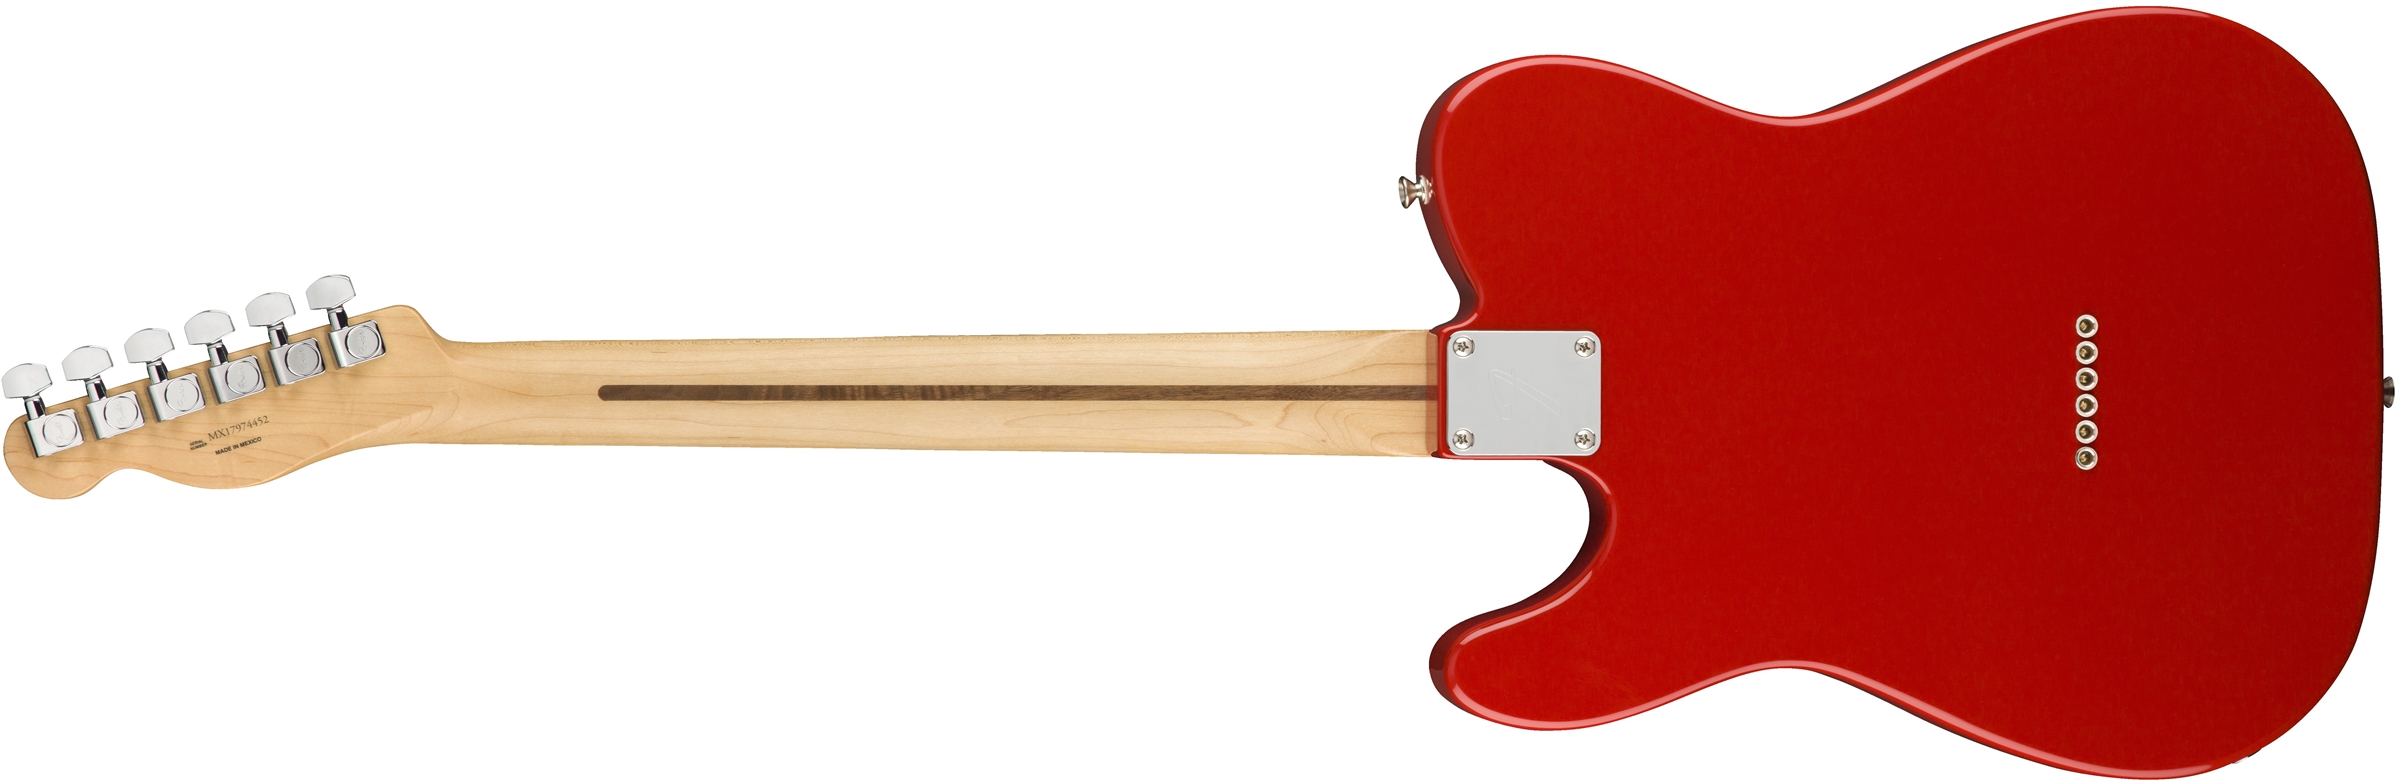 Fender Tele Player Mex Ss Pf - Sonic Red - Guitare Électrique Forme Tel - Variation 1